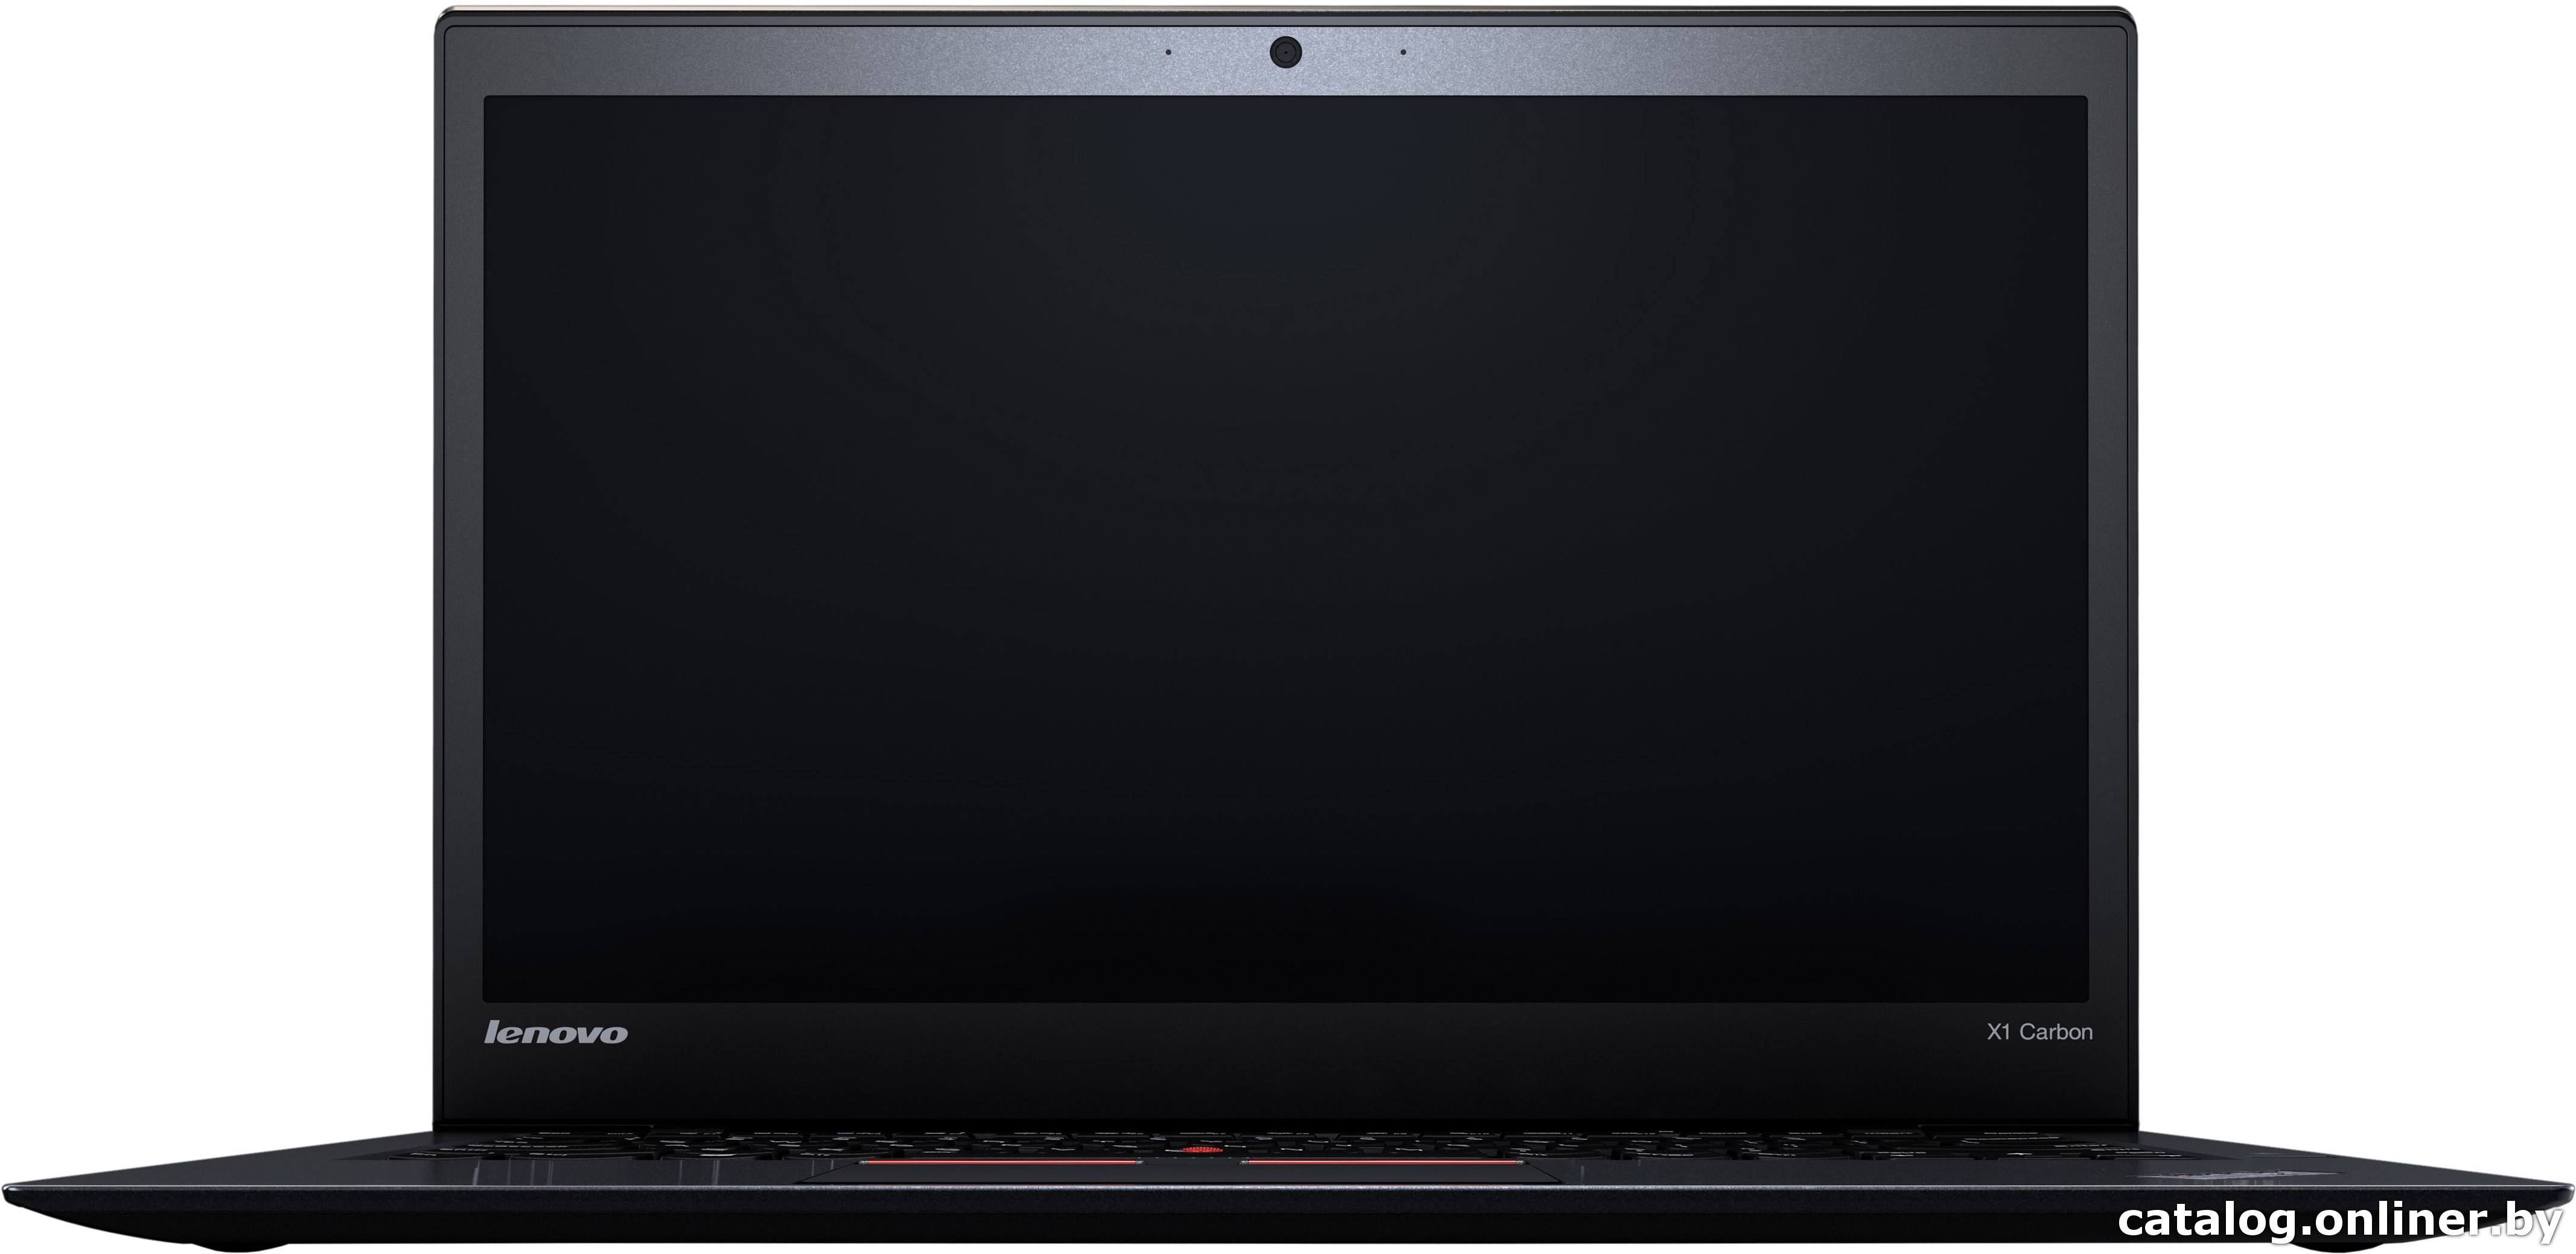 Замена жесткого диска Lenovo ThinkPad X1 Carbon 3